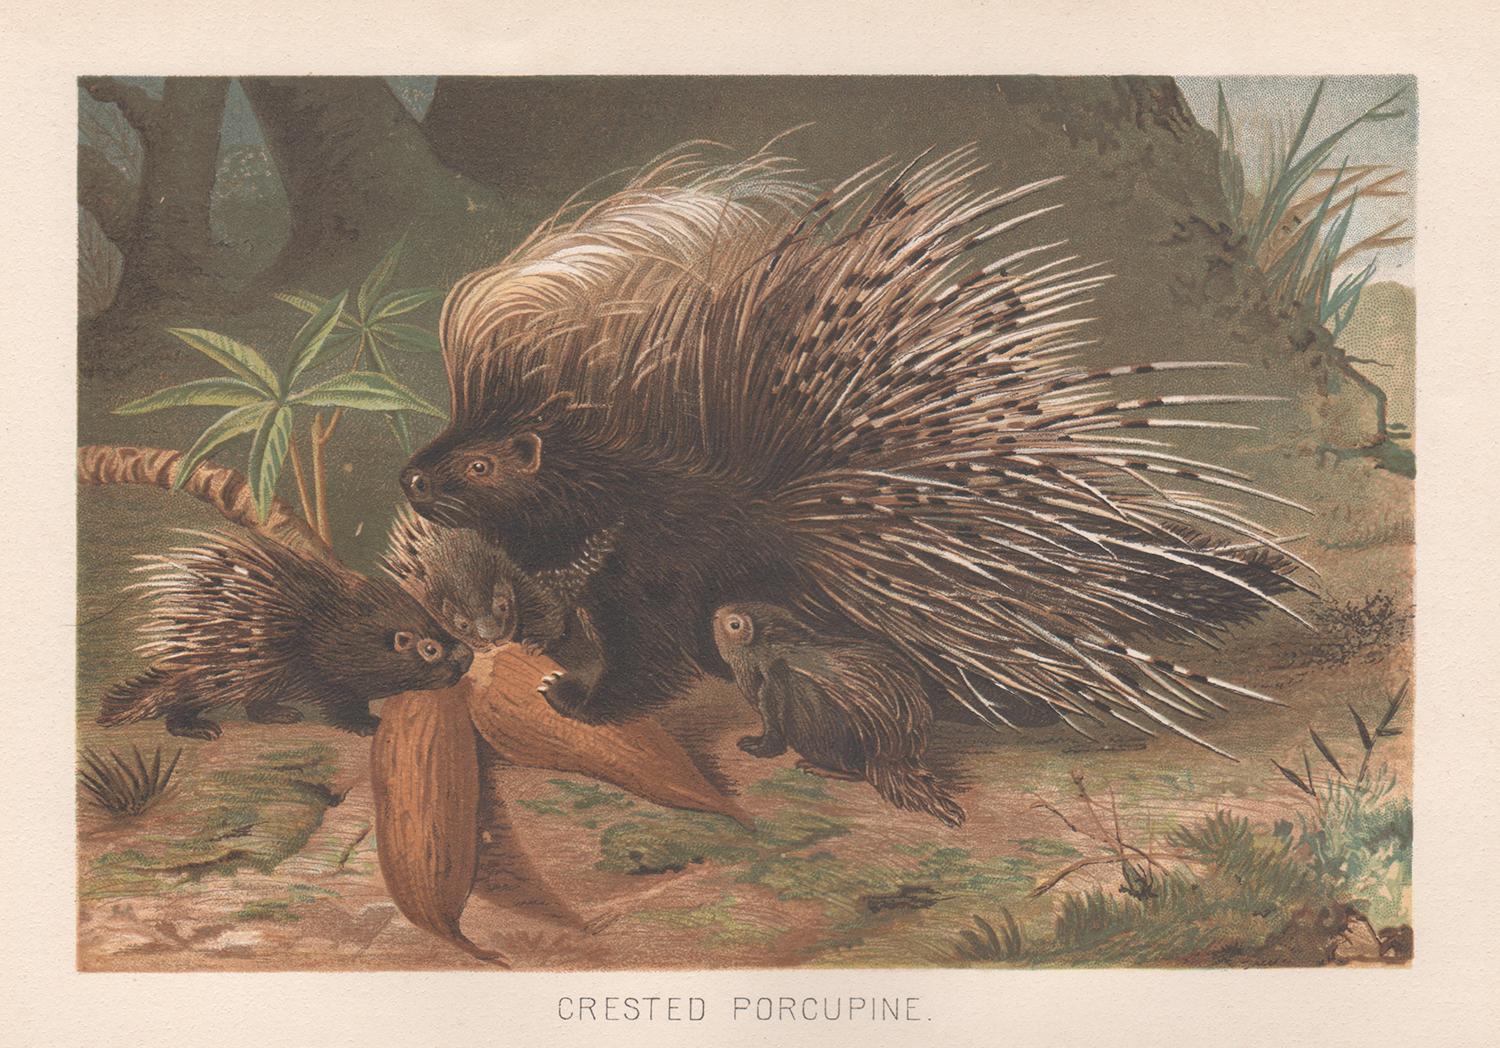 Crested Porcupine, Antique Natural History Chromolithograph, circa 1895